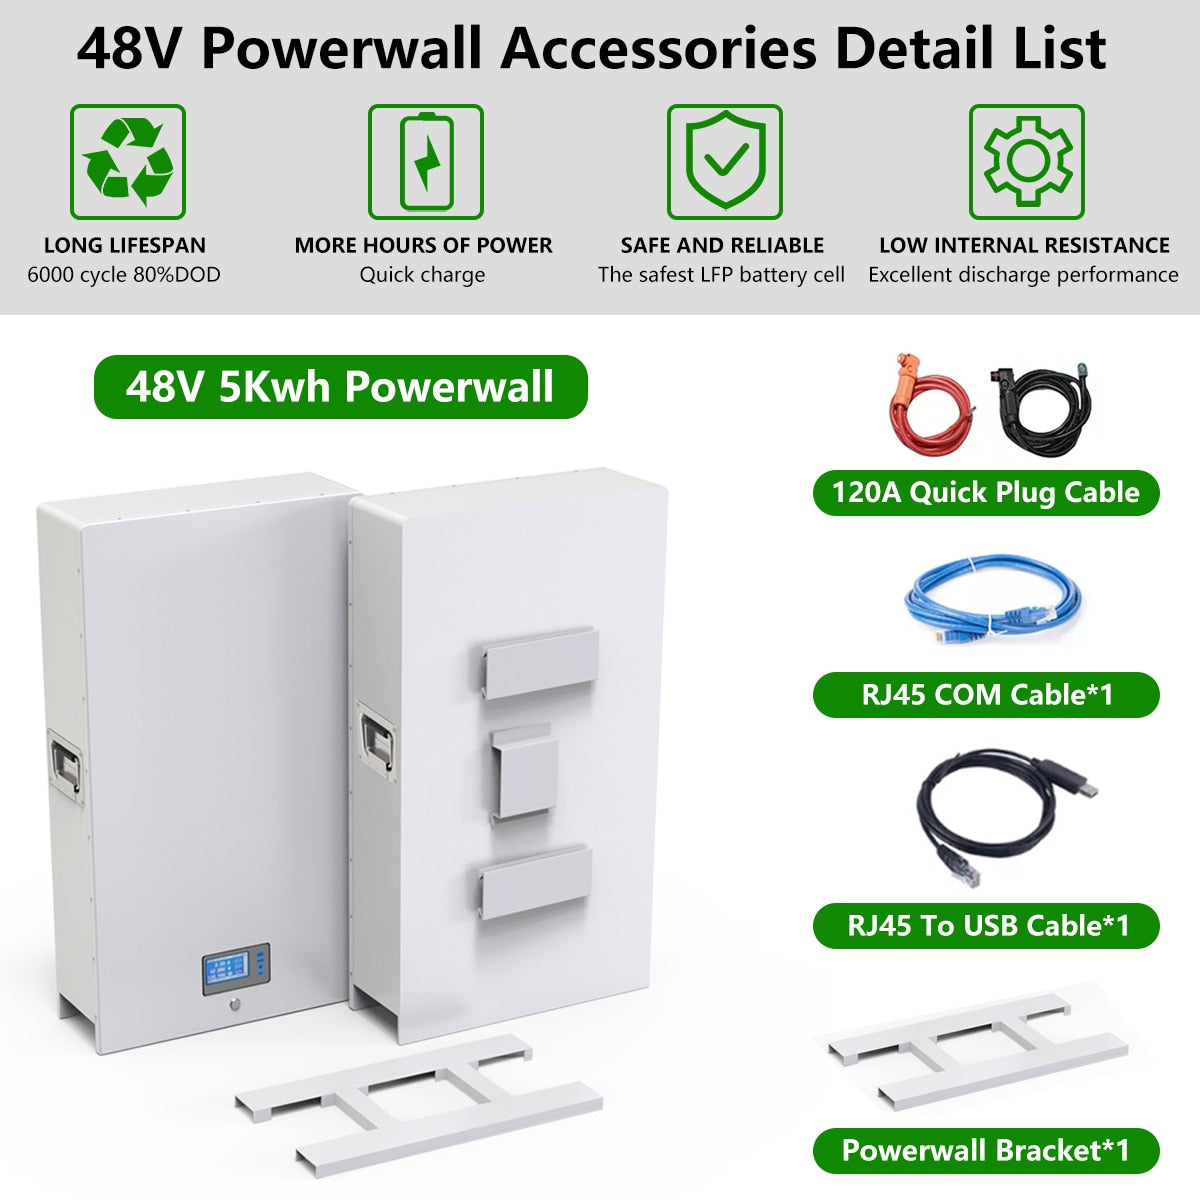 48V Powerwall Accessories Detail List LONG LIFESPAN MORE